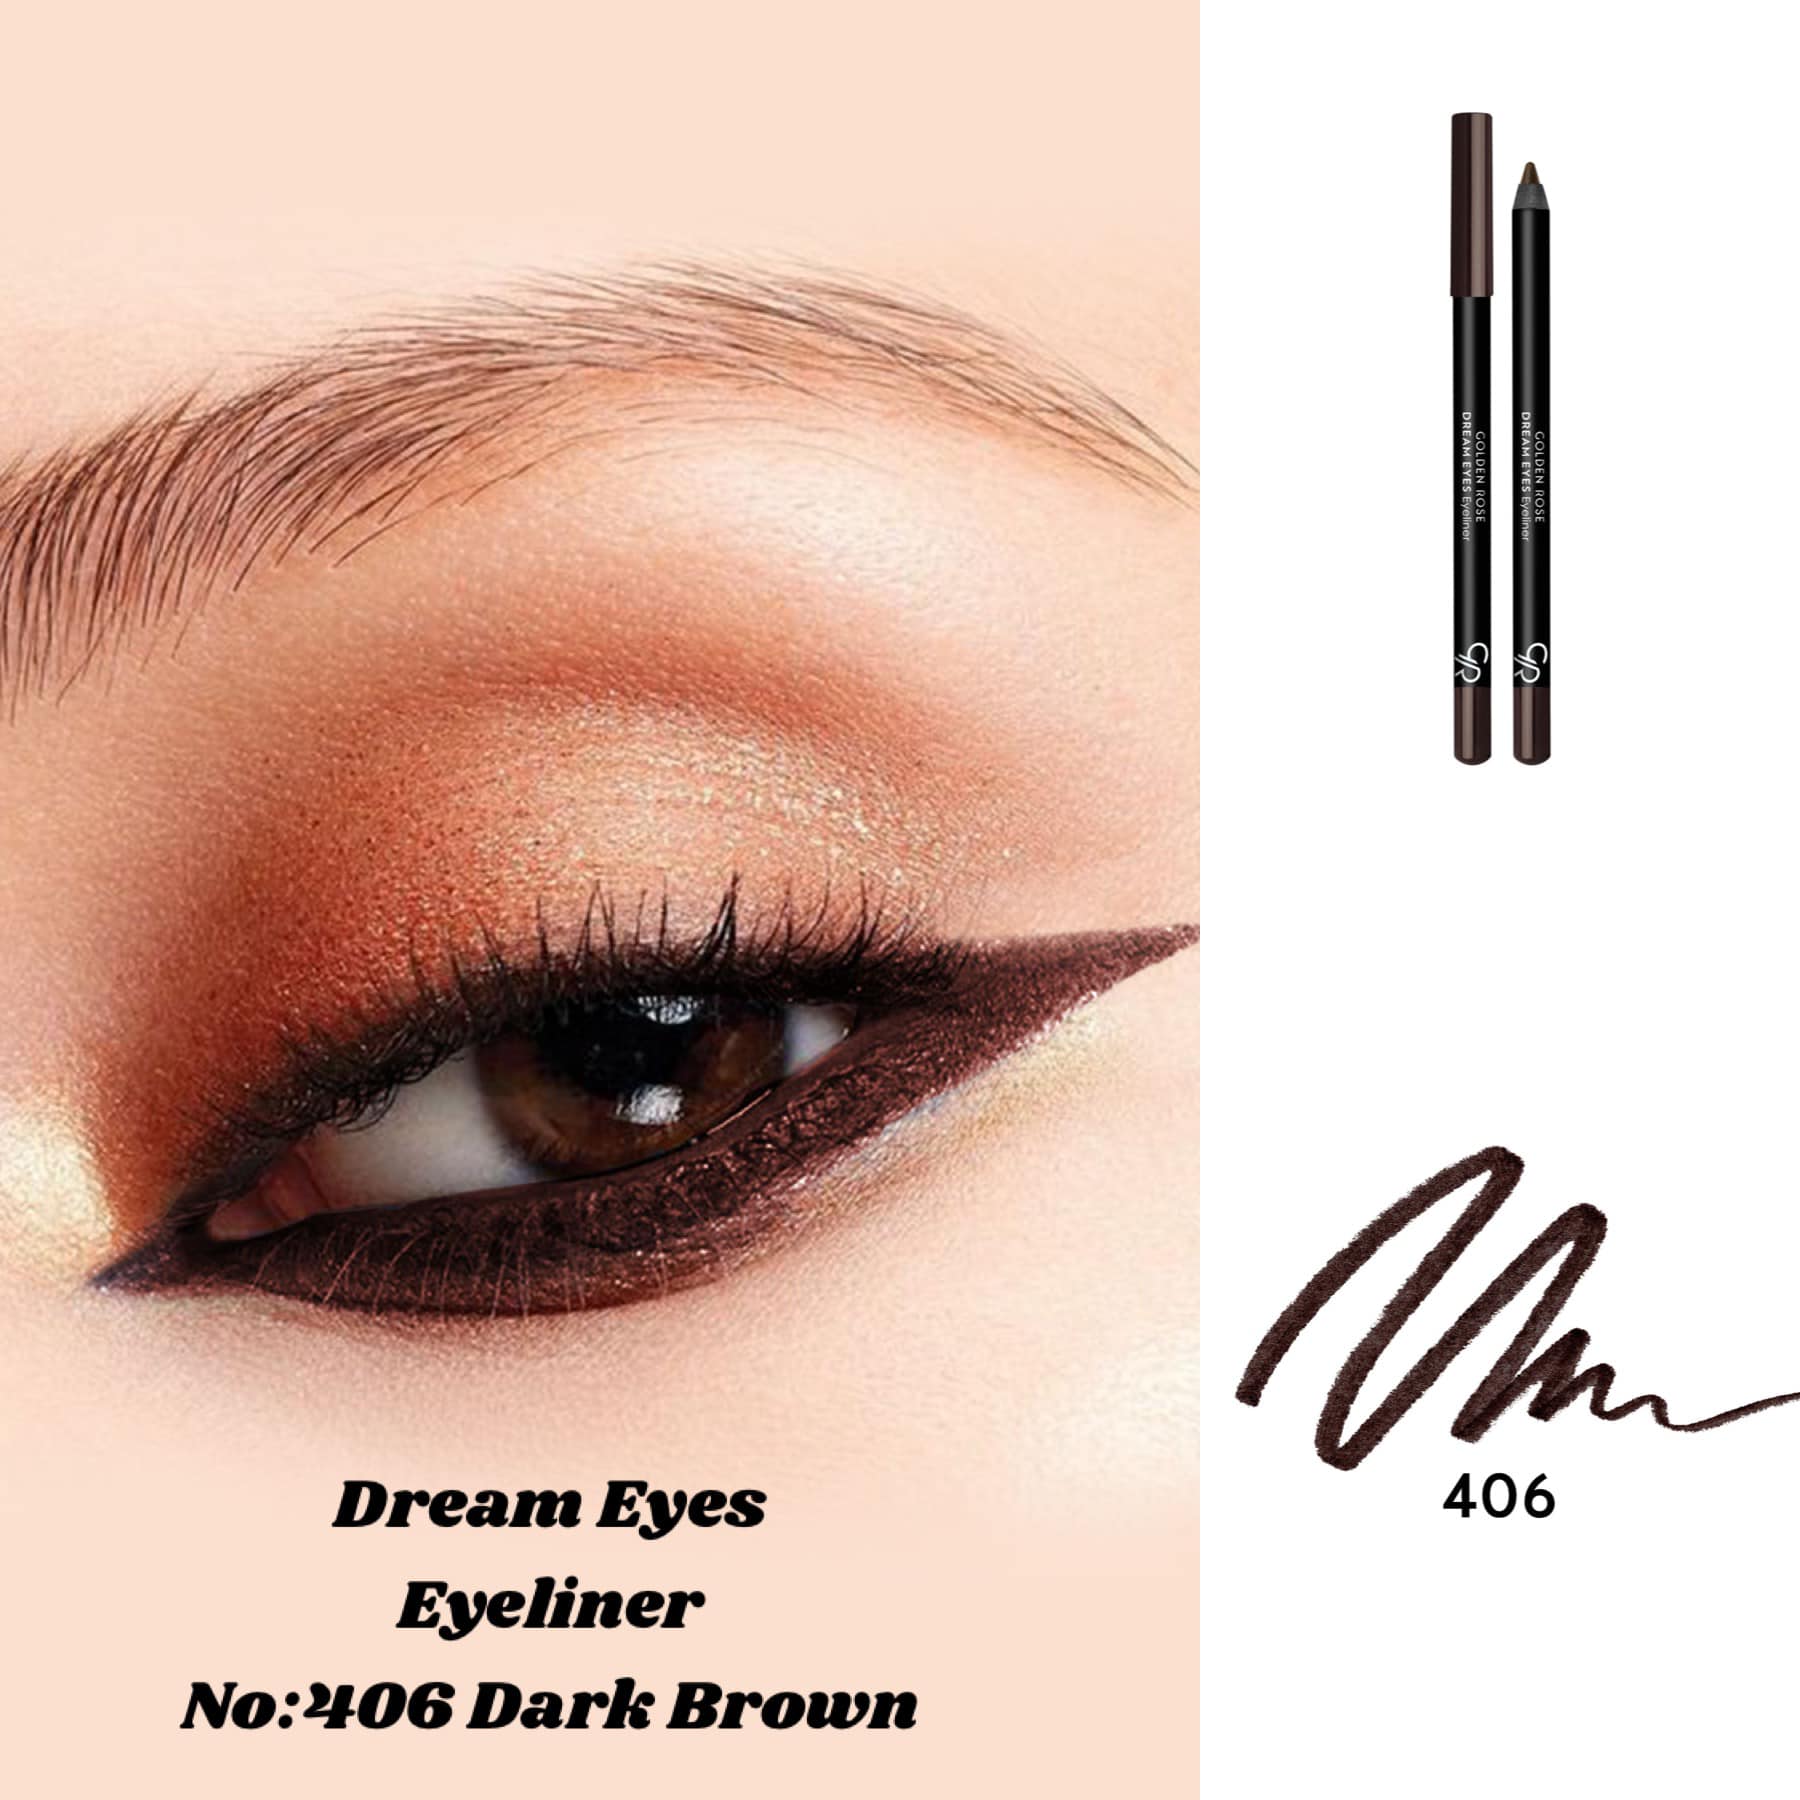 Dream Eyes Eyeliner